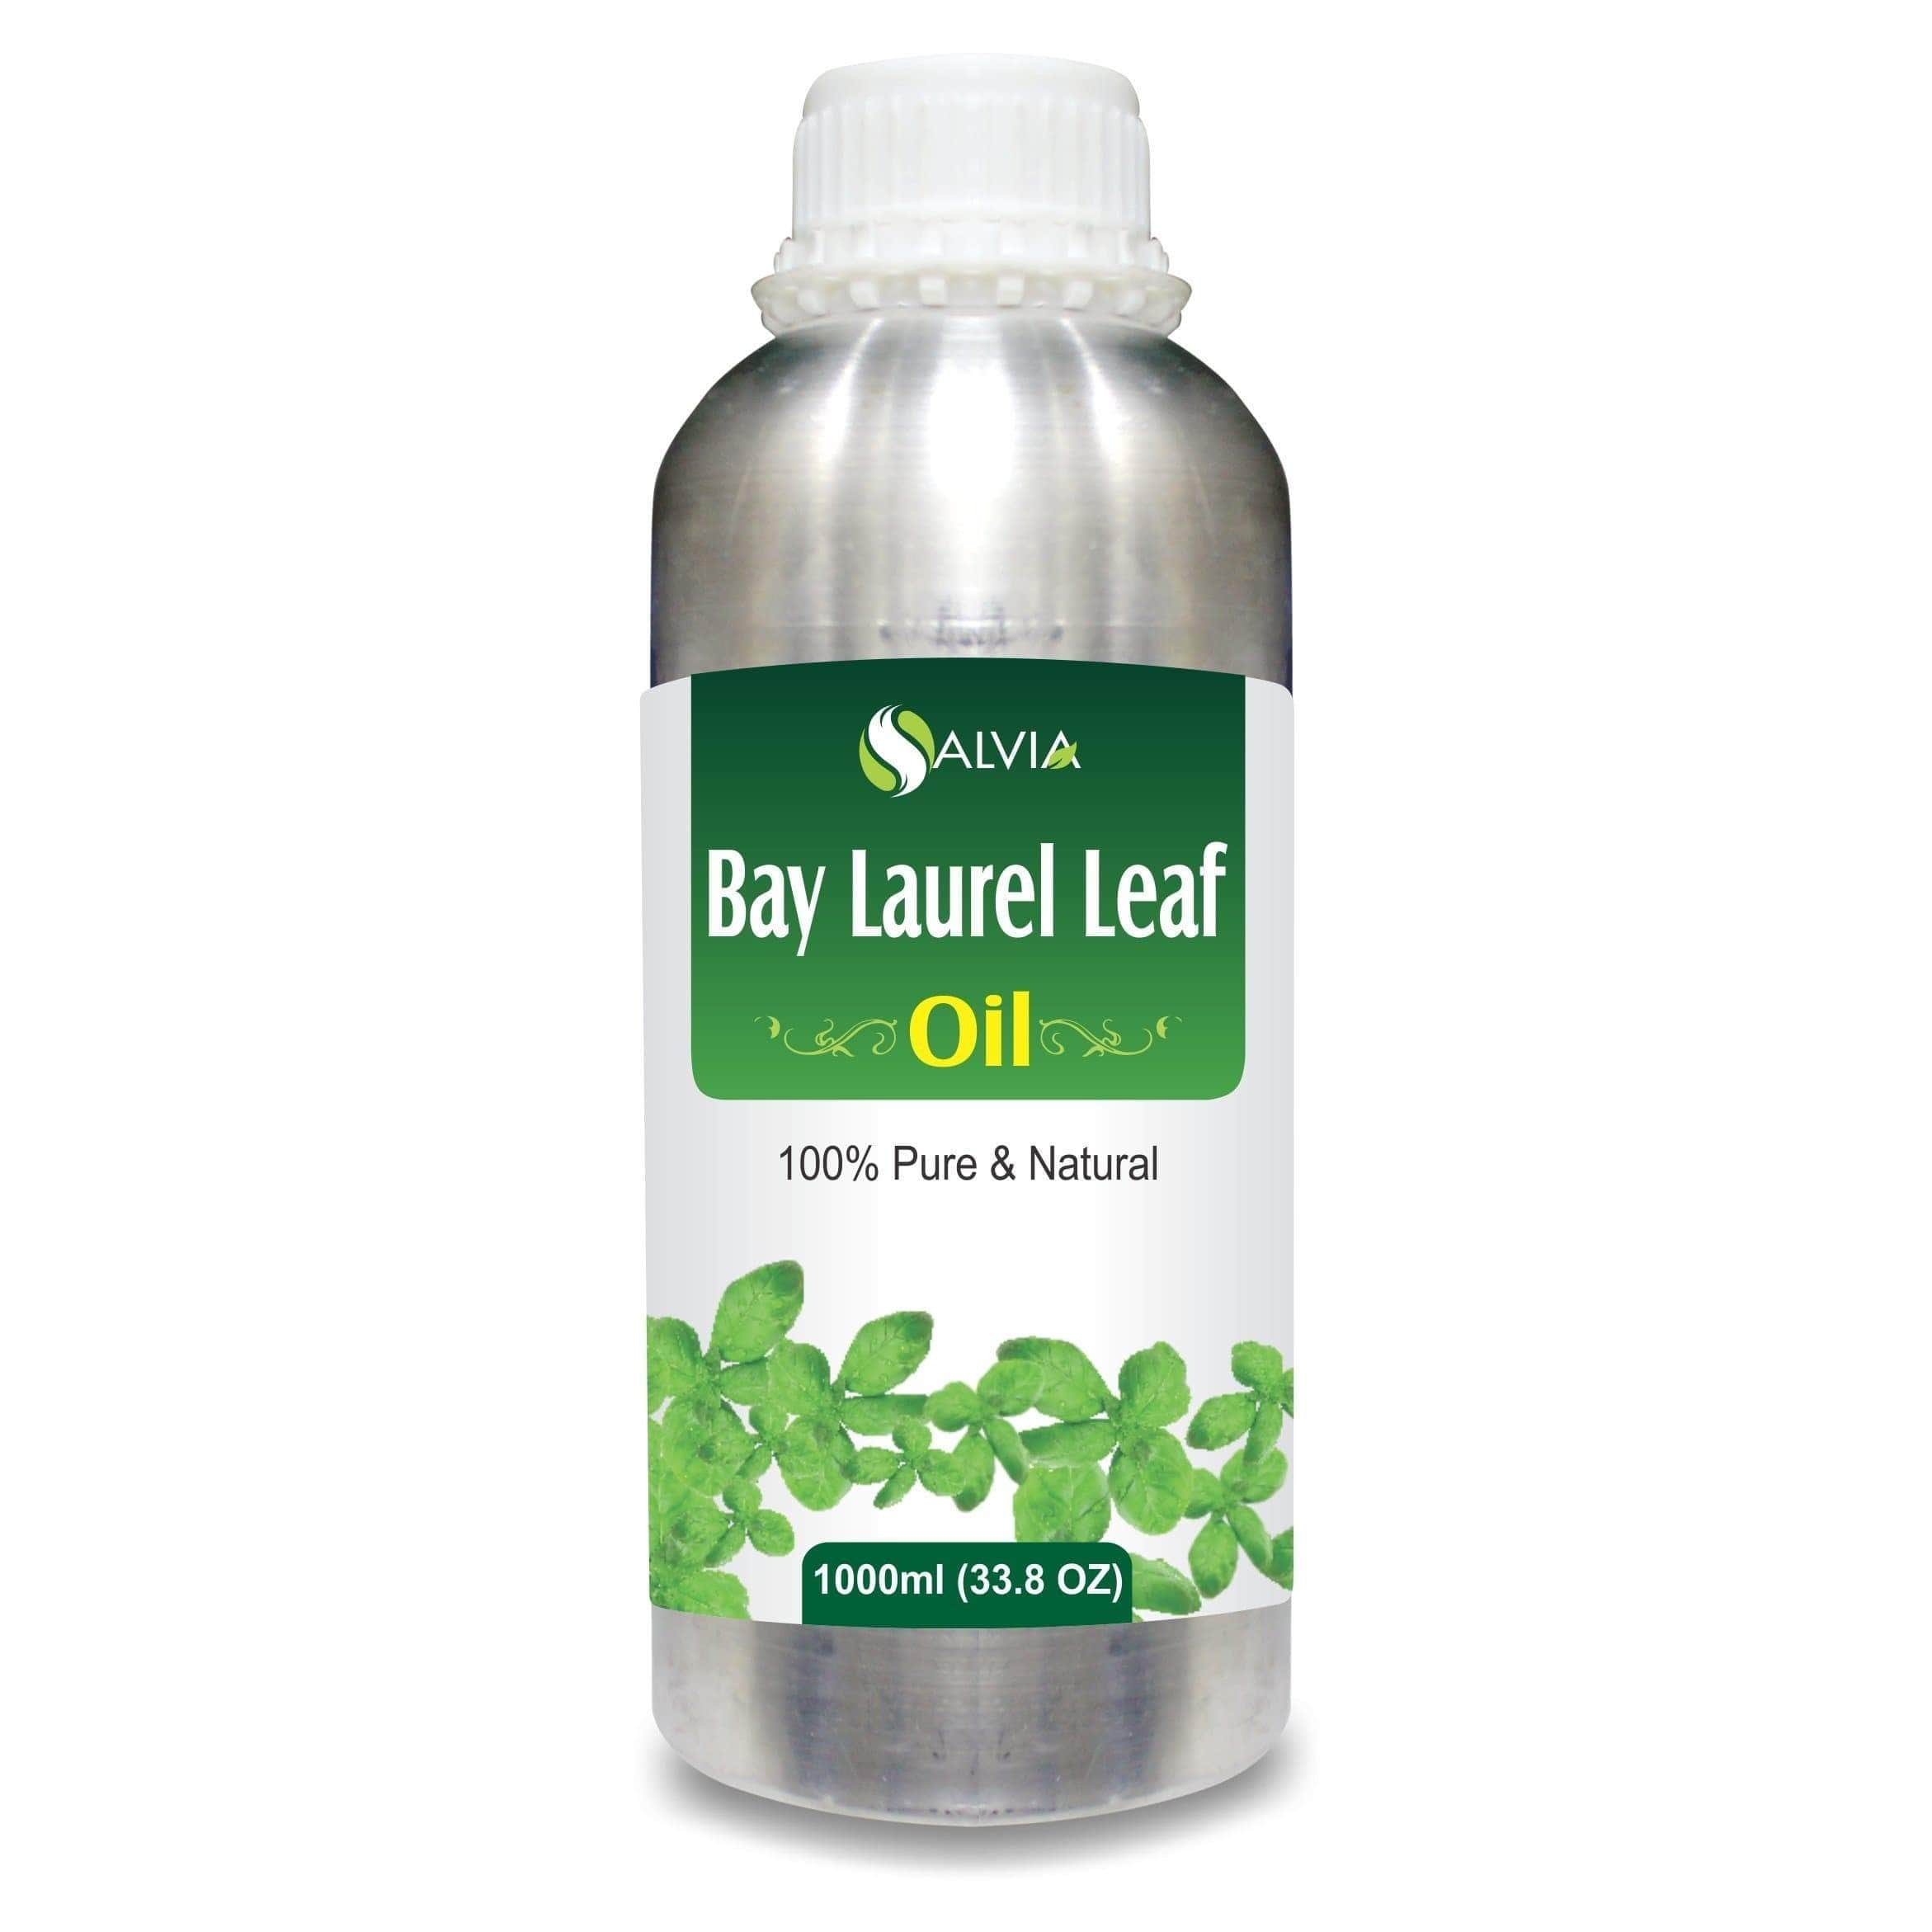 laurel oil soap benefits